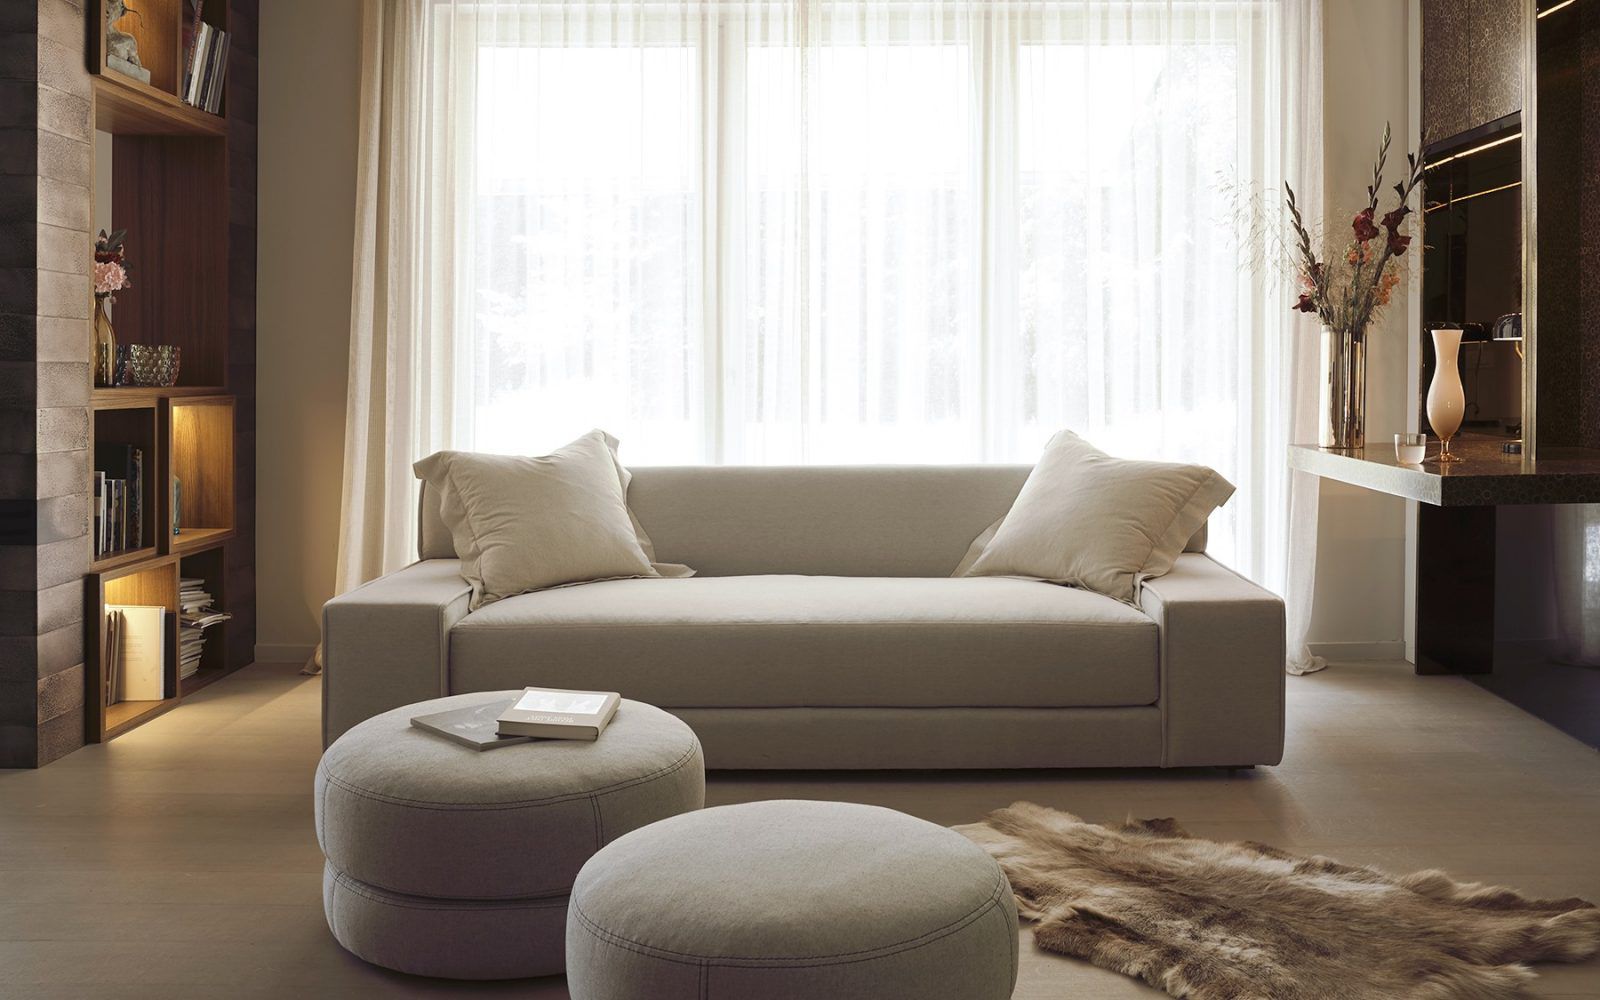 RM Living Cincinnati Interior Design Custom Modern Furniture By Verellen